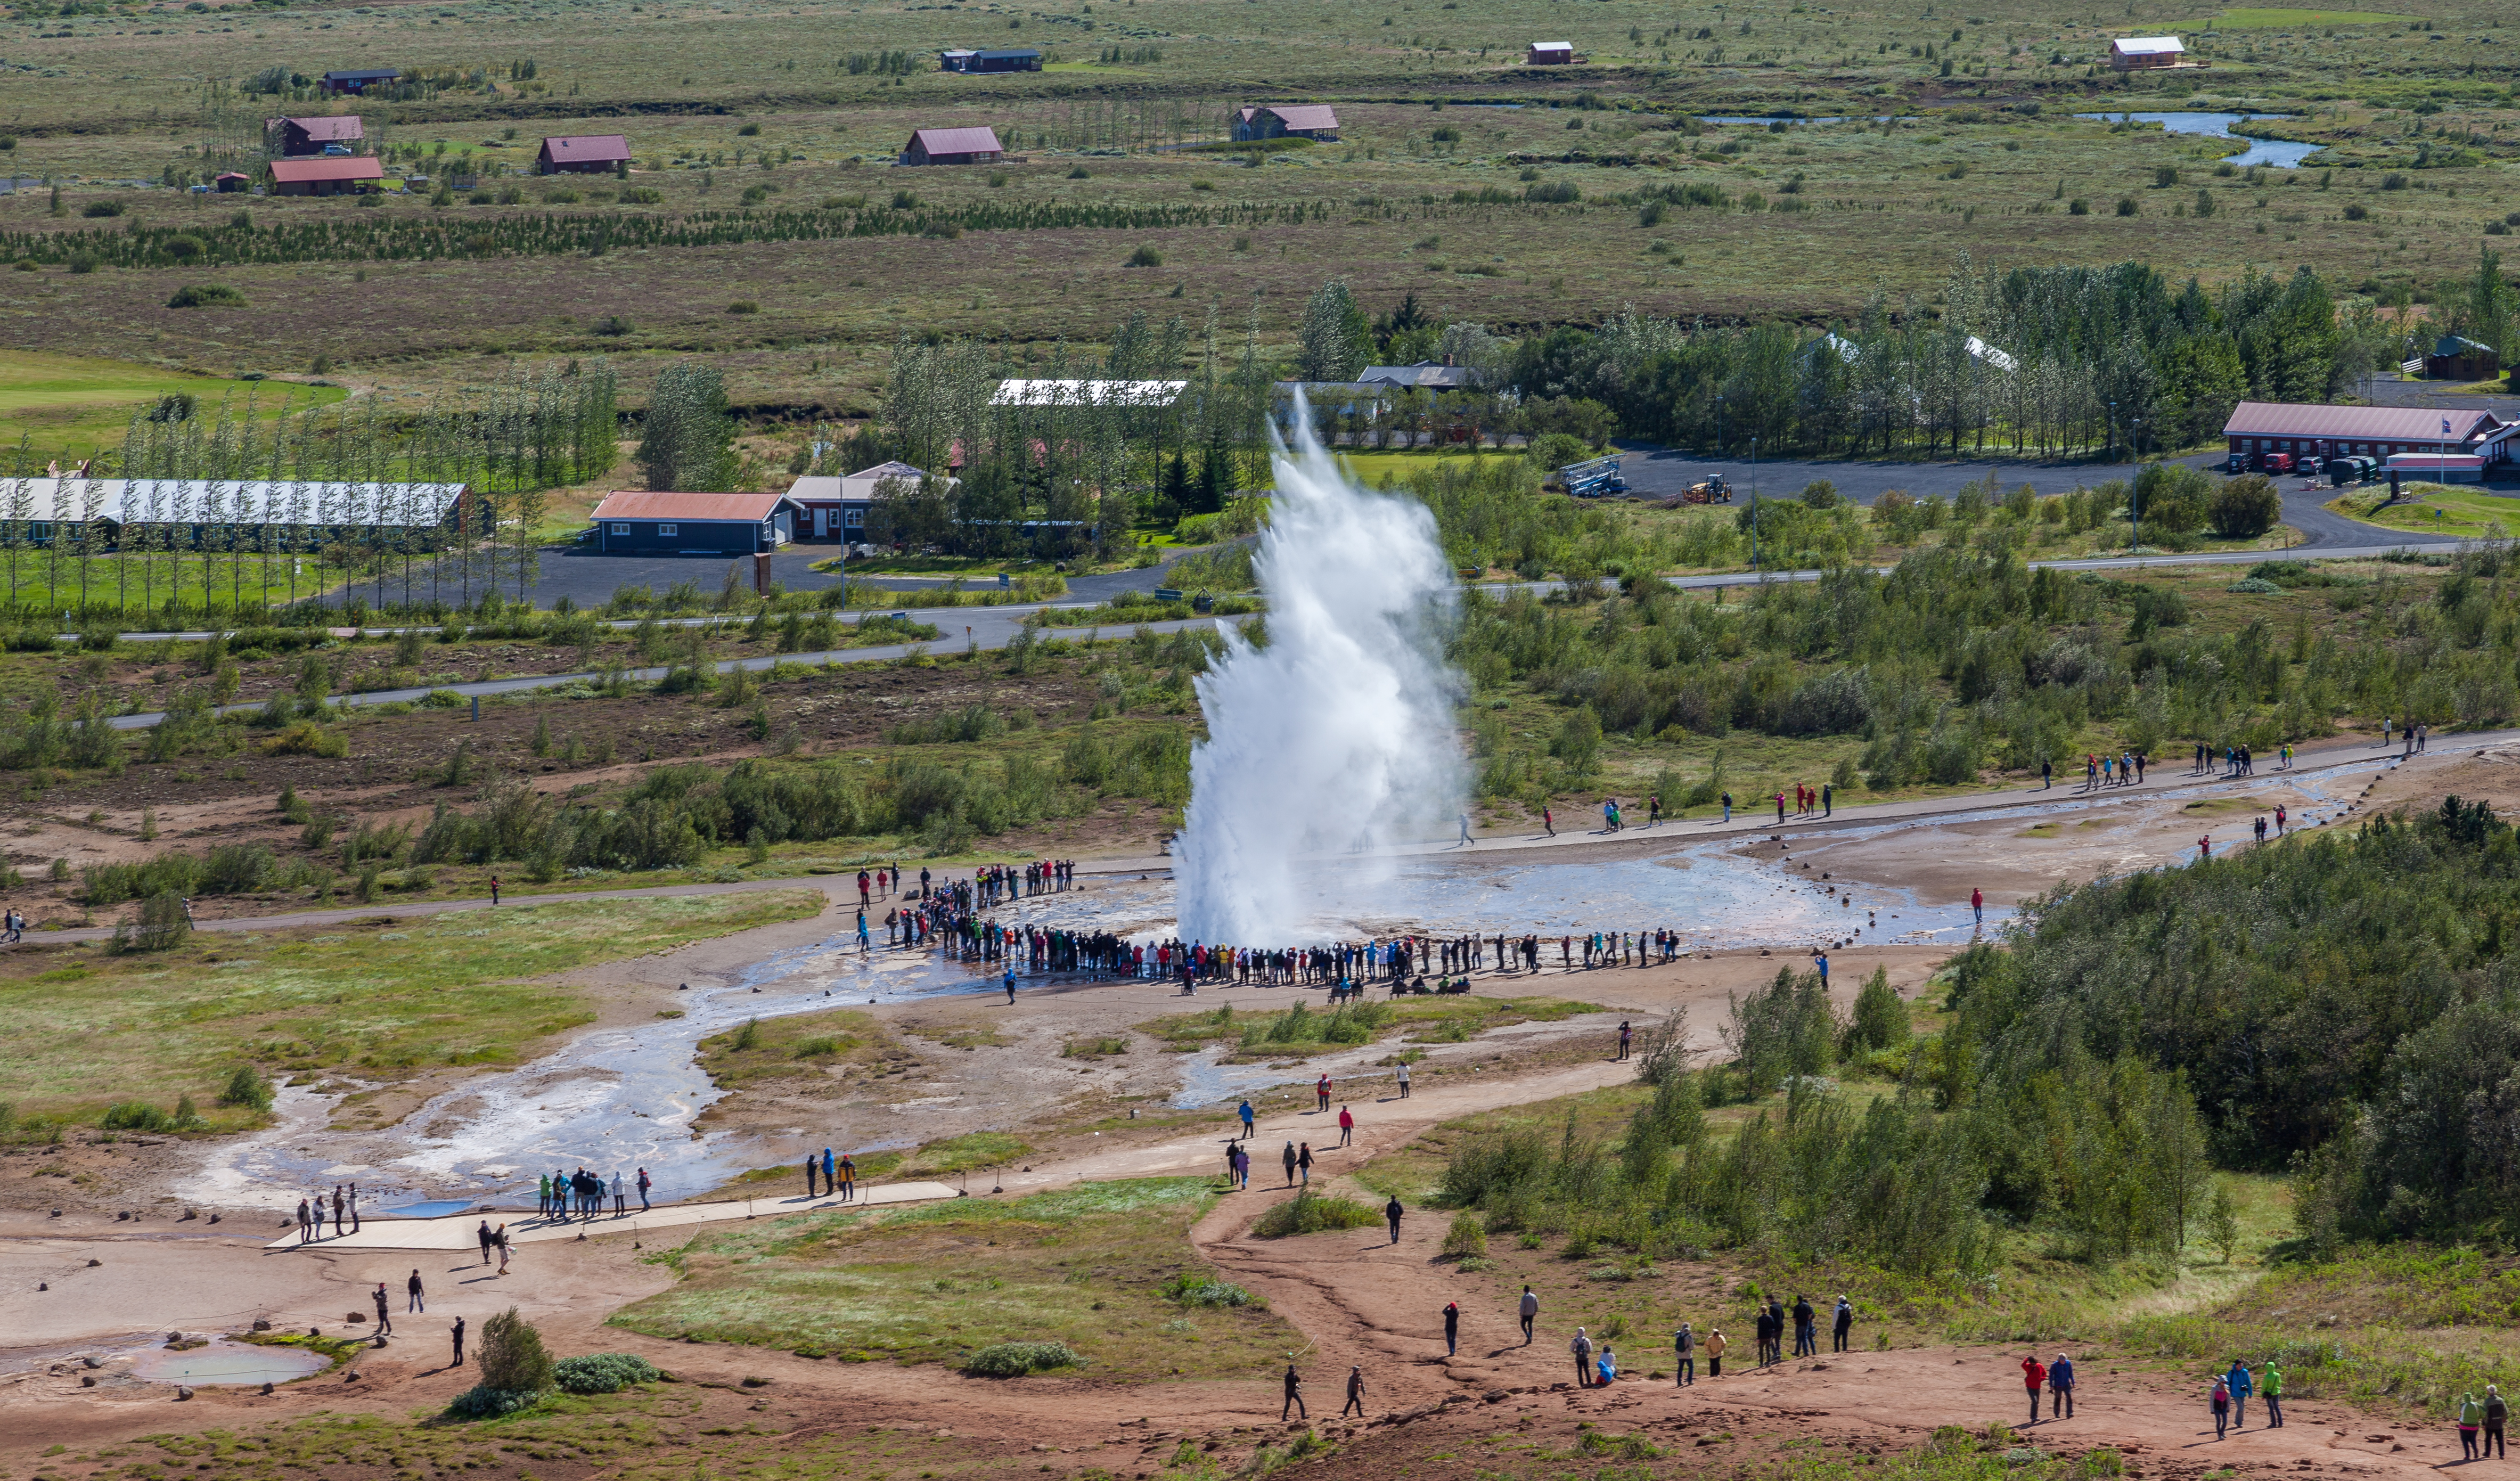 Strokkur, Área geotérmica de Geysir, Suðurland, Islandia, 2014-08-16, DD 097